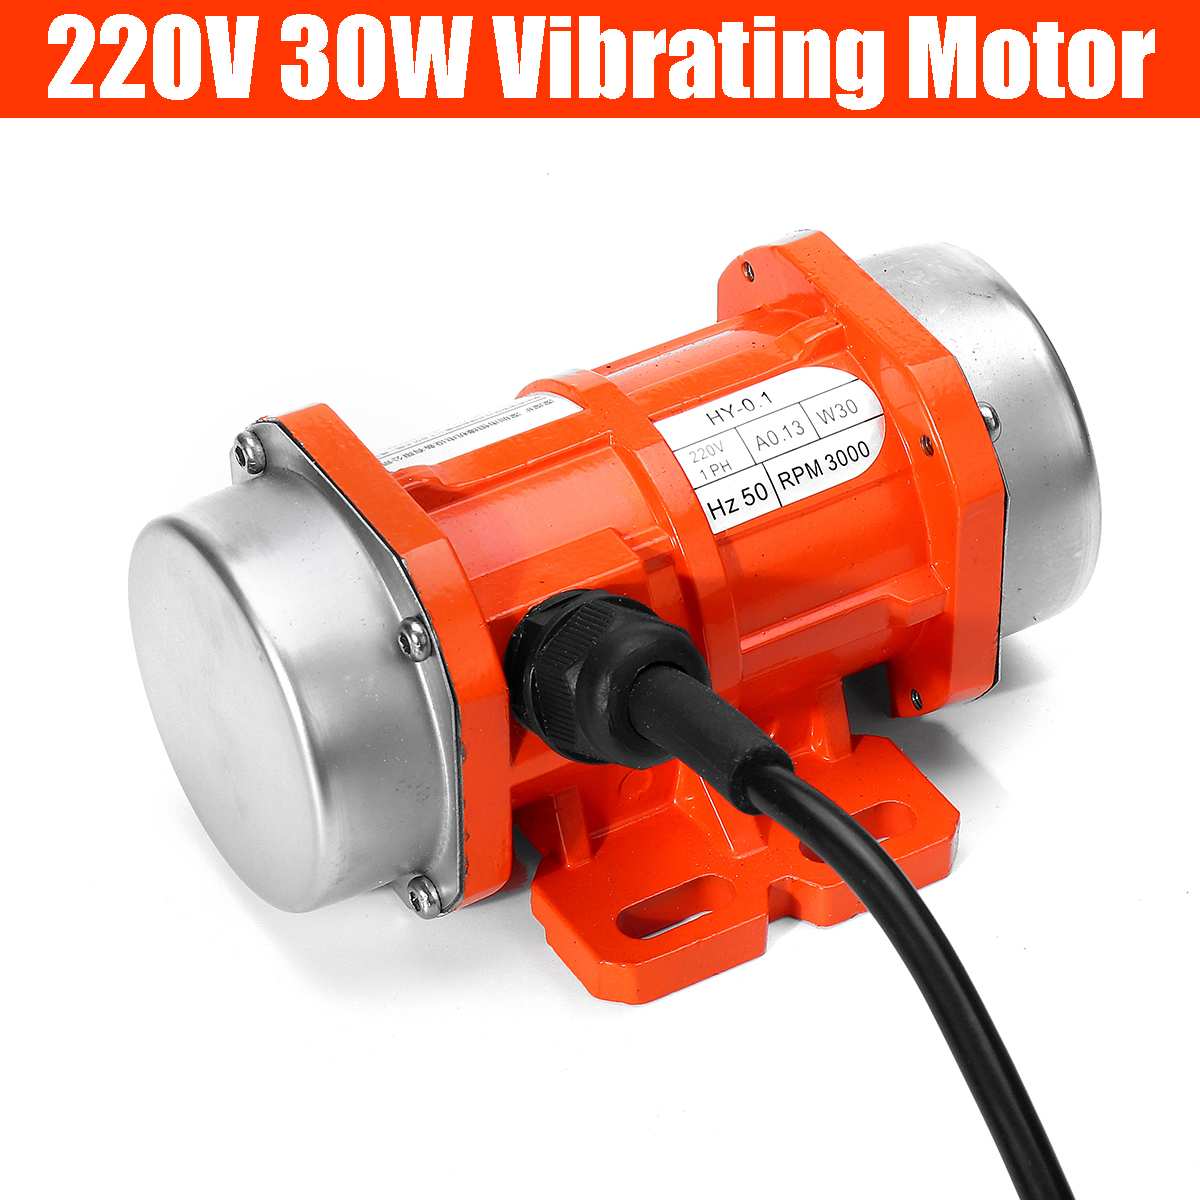 15W 30W 220V Vibrating Motor Adjustable Speed for Feeding Machine, Shotcrete Machine, Washing Machine + Motor Speed Controller